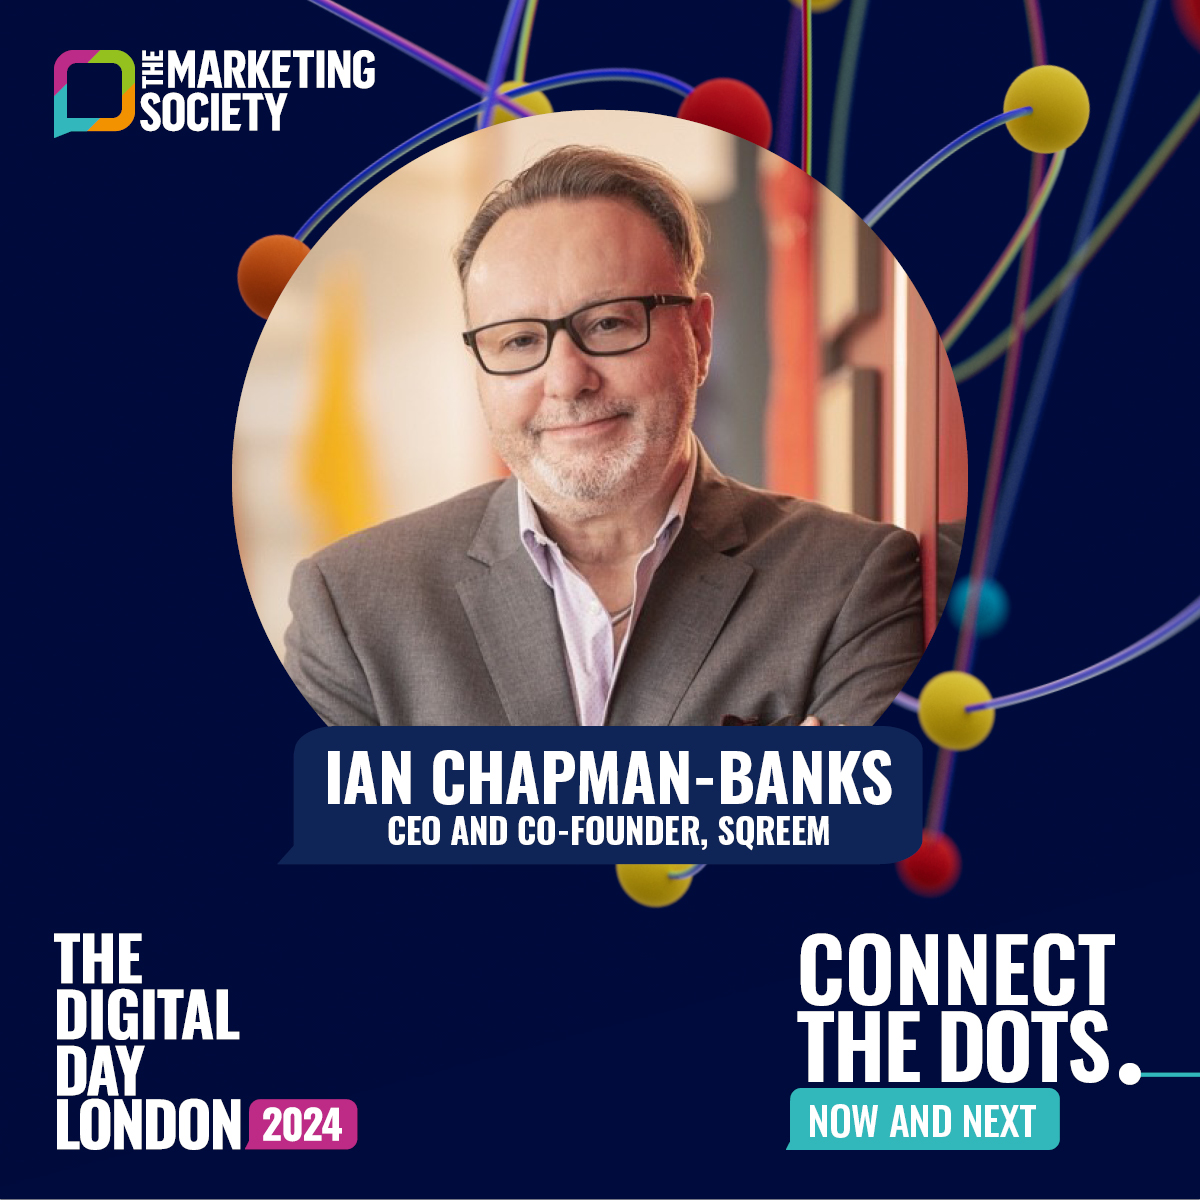 Ian Chapman-Banks